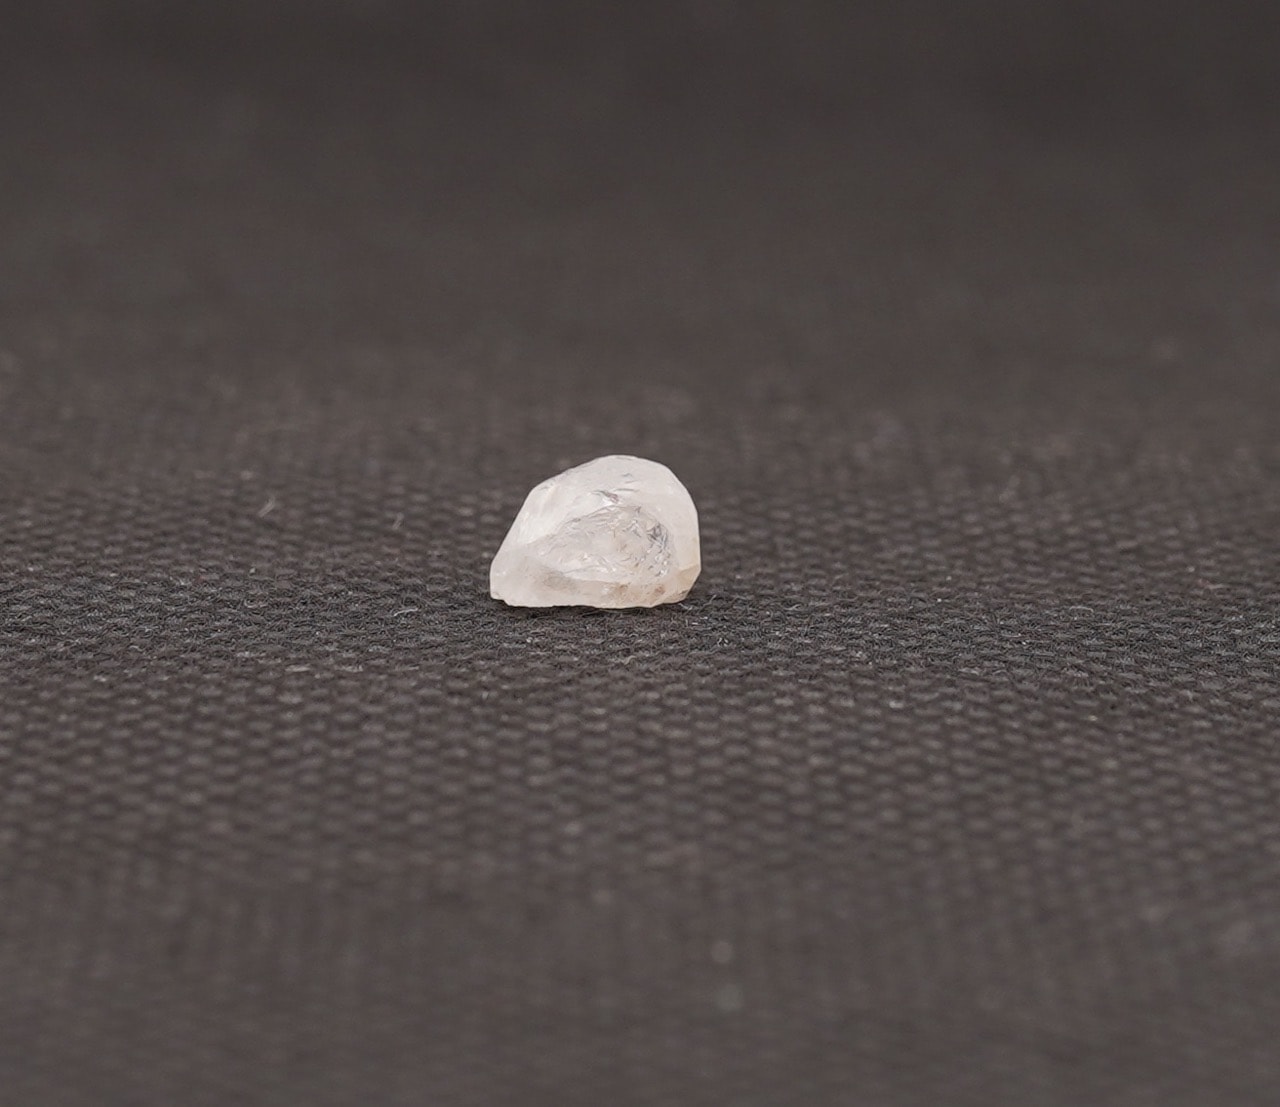 Fenacit nigerian cristal natural unicat f317